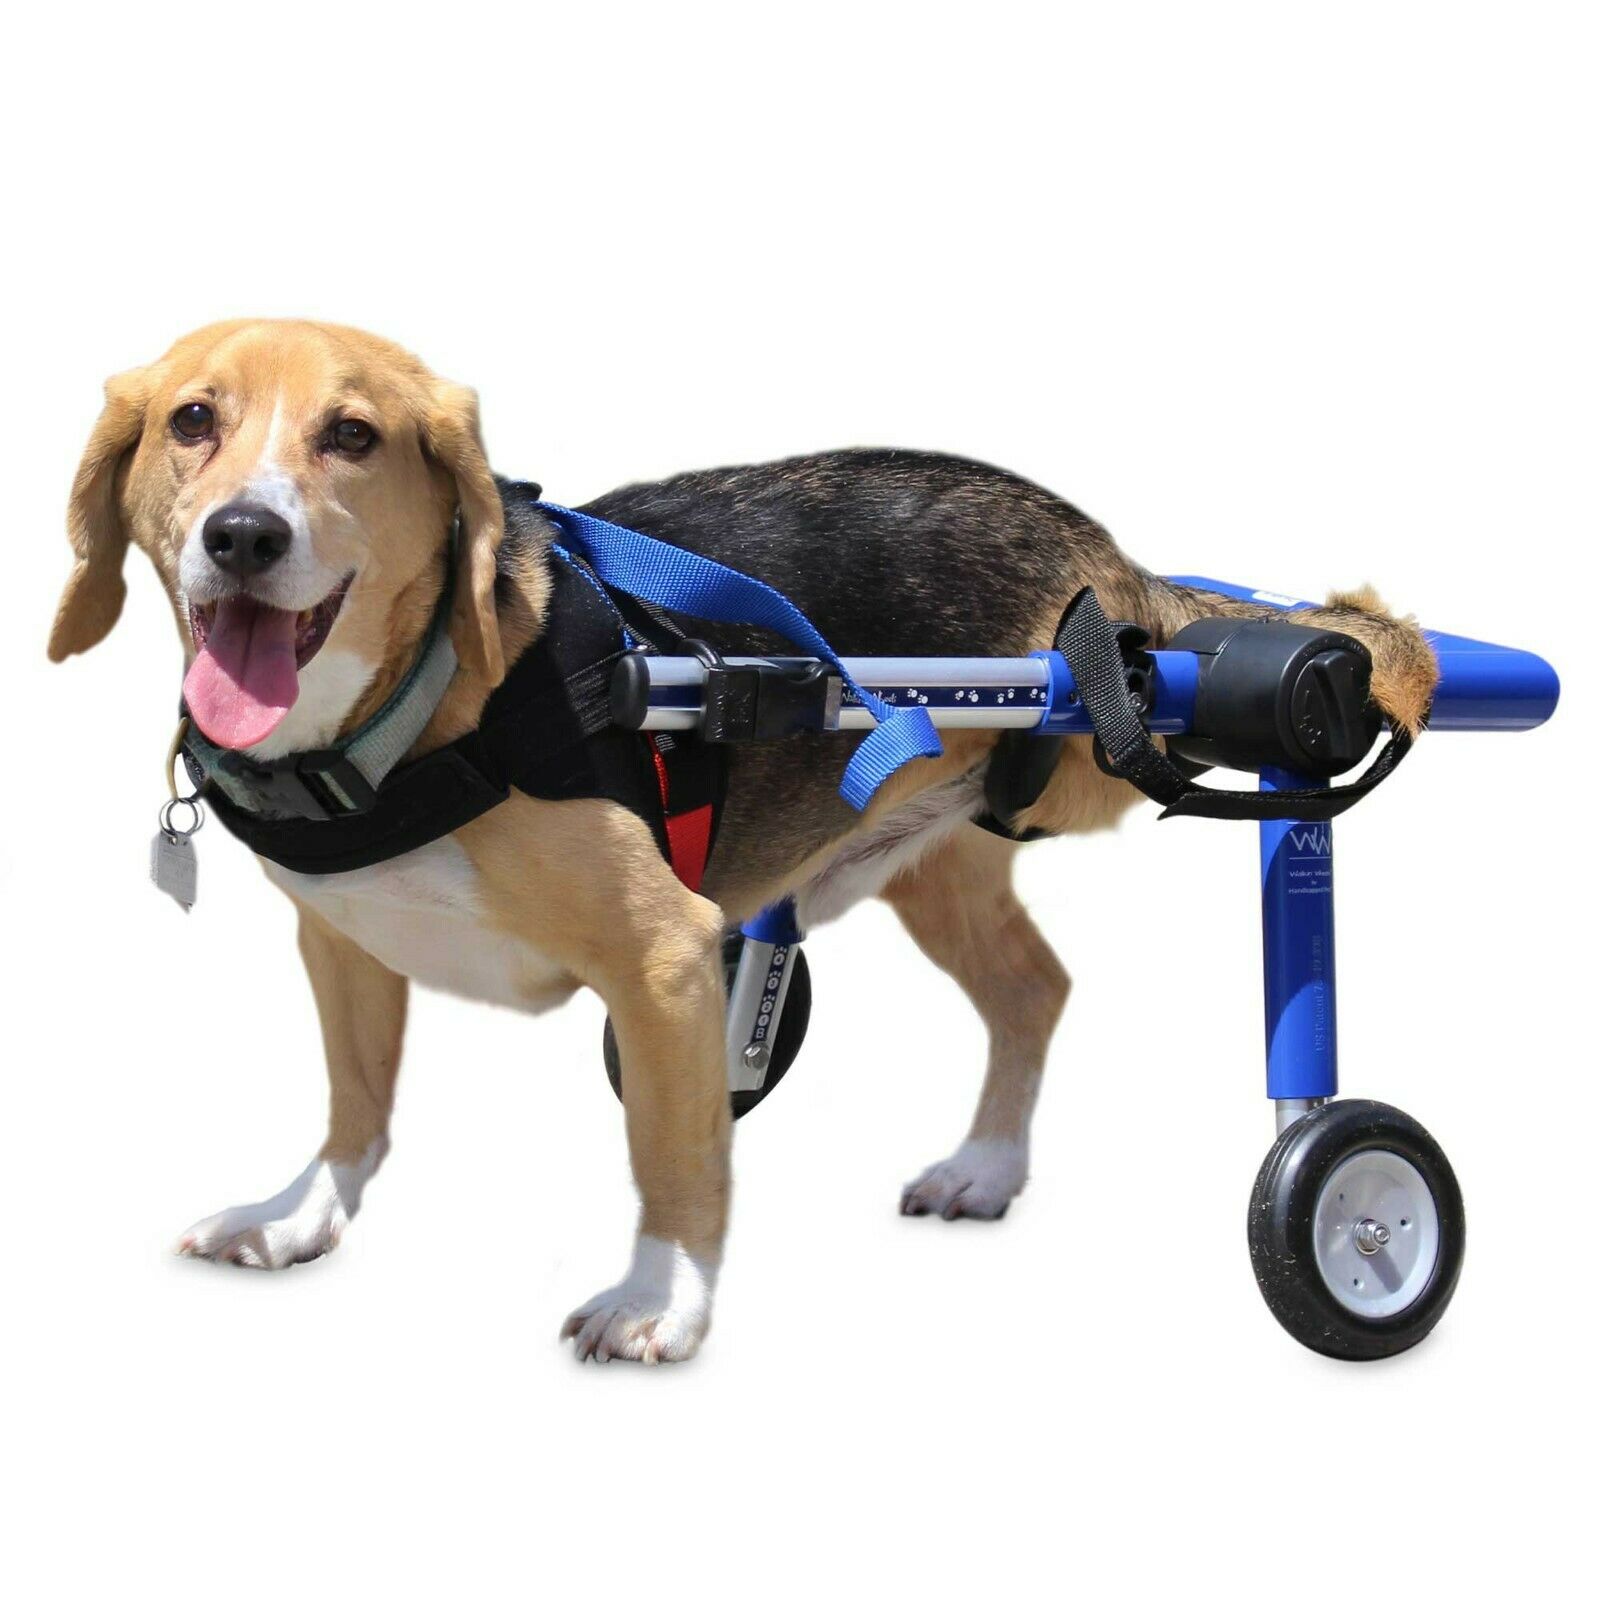 Refurbished Dog Wheelchair - For Medium Dogs 26-50lbs - By Walkin' Wheels